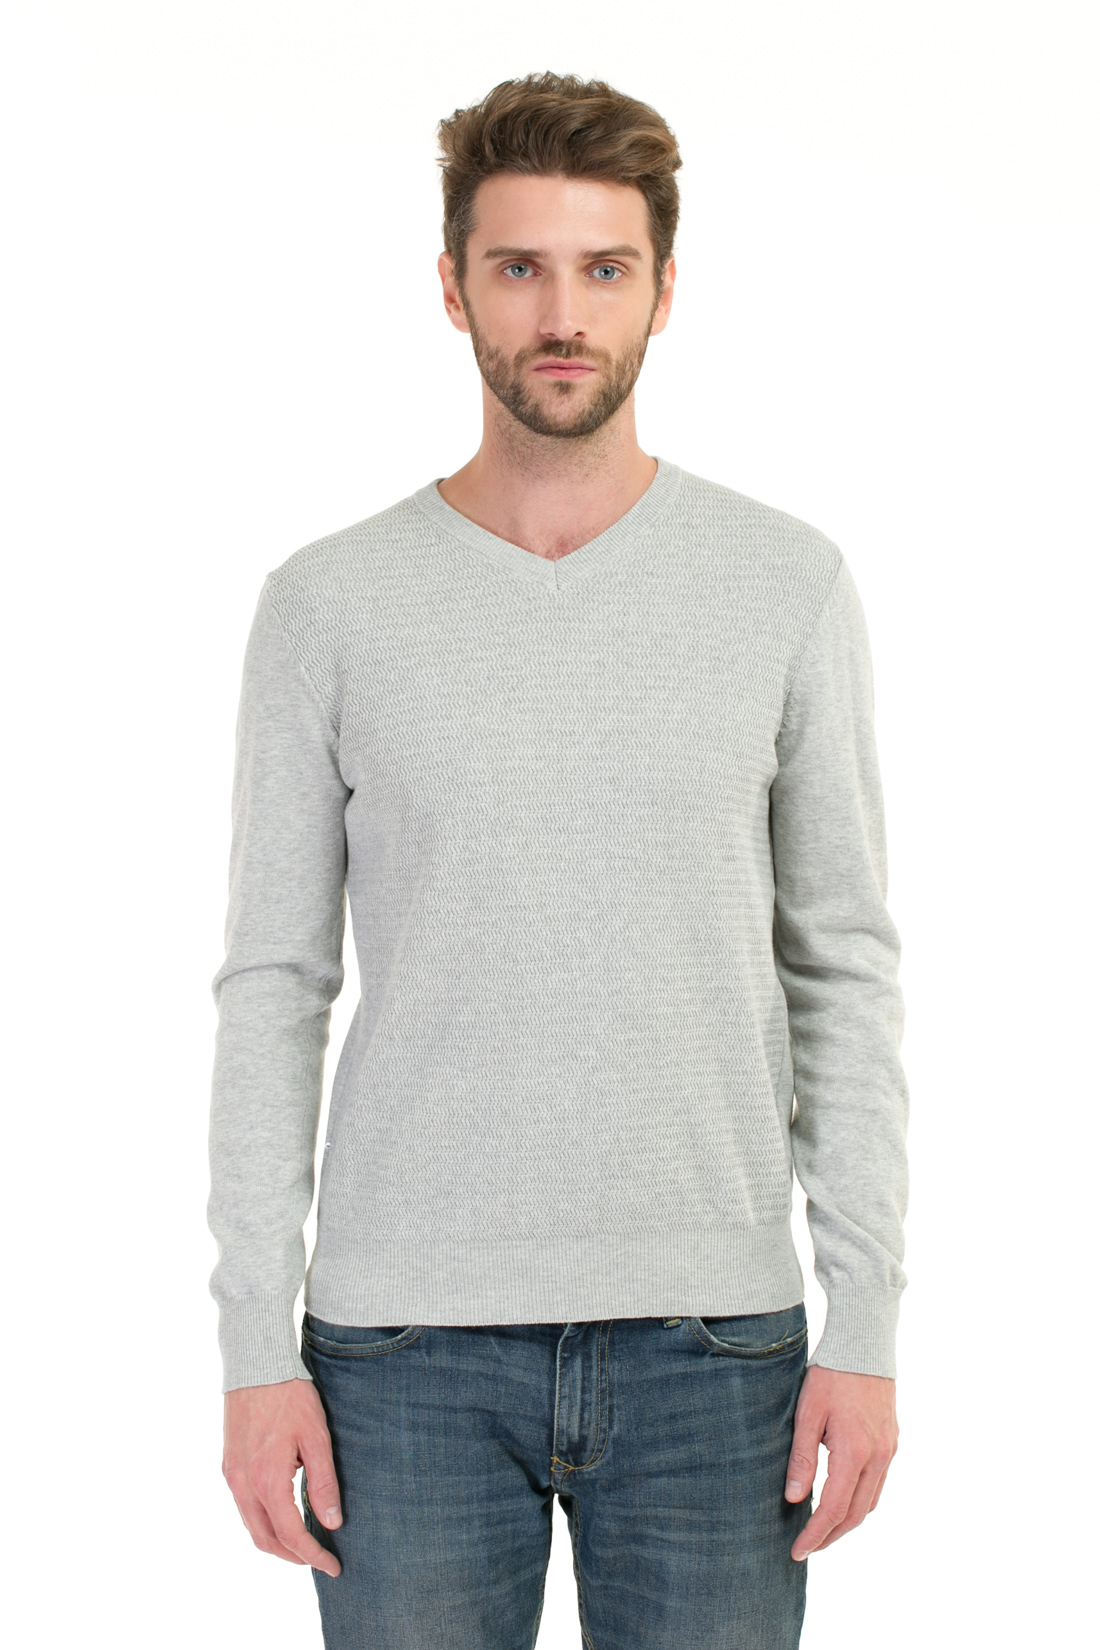 Пуловер с рельефным узором (арт. baon B637016), размер XXL, цвет silver melange#серый Пуловер с рельефным узором (арт. baon B637016) - фото 1